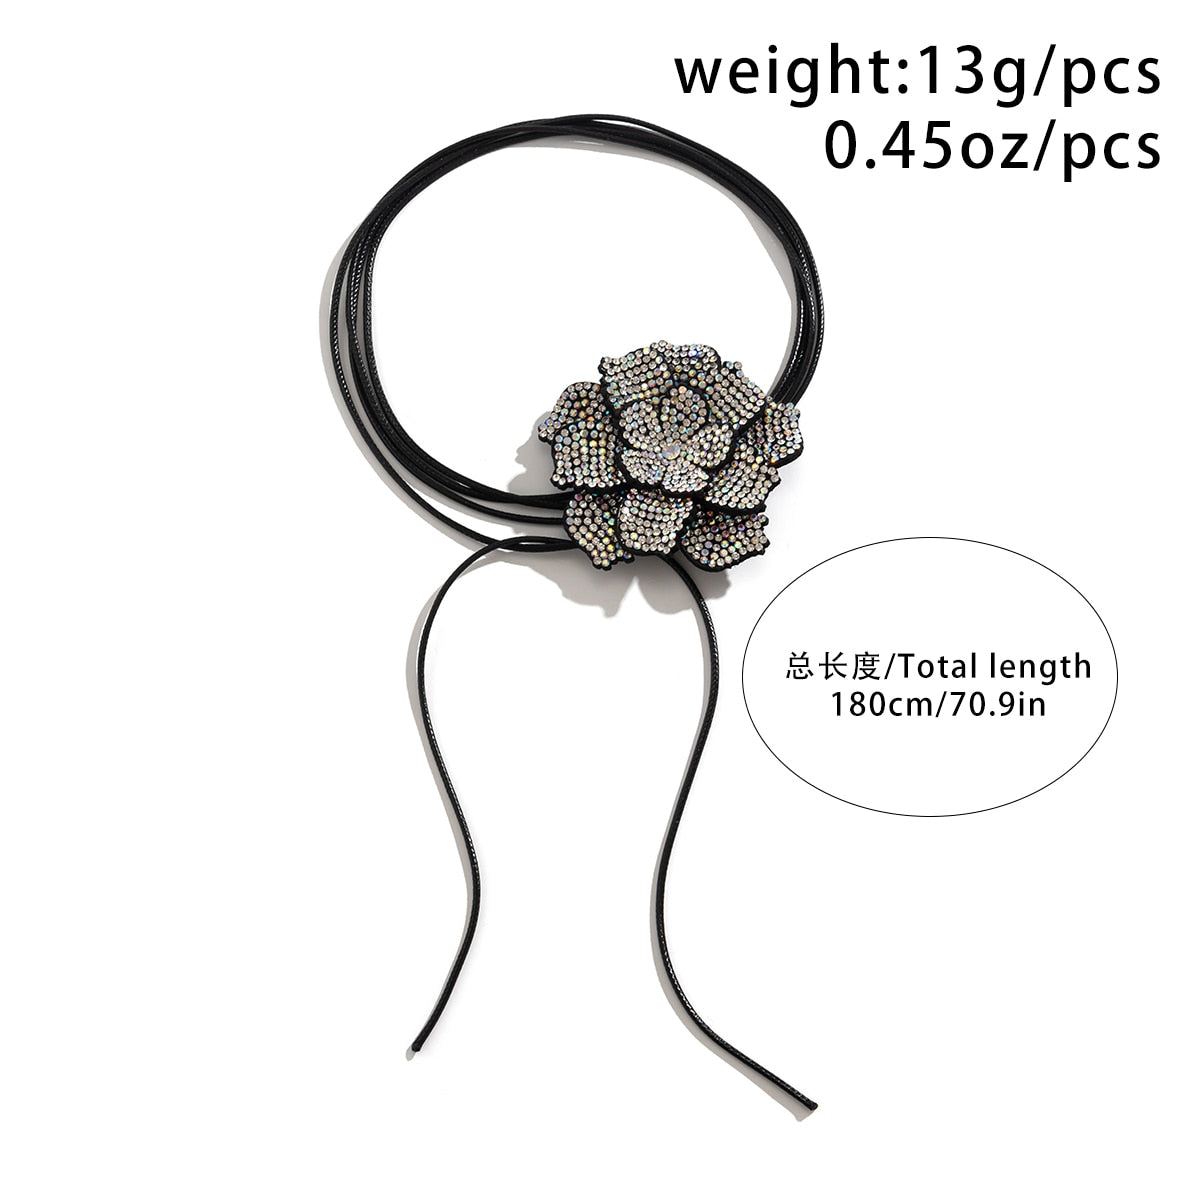 IngeSight.Z Luxury Full Rhinestone Big Rose Flower Choker Necklace Women Black Leather Wax Rope Clavicle Chain Adjustable Neck